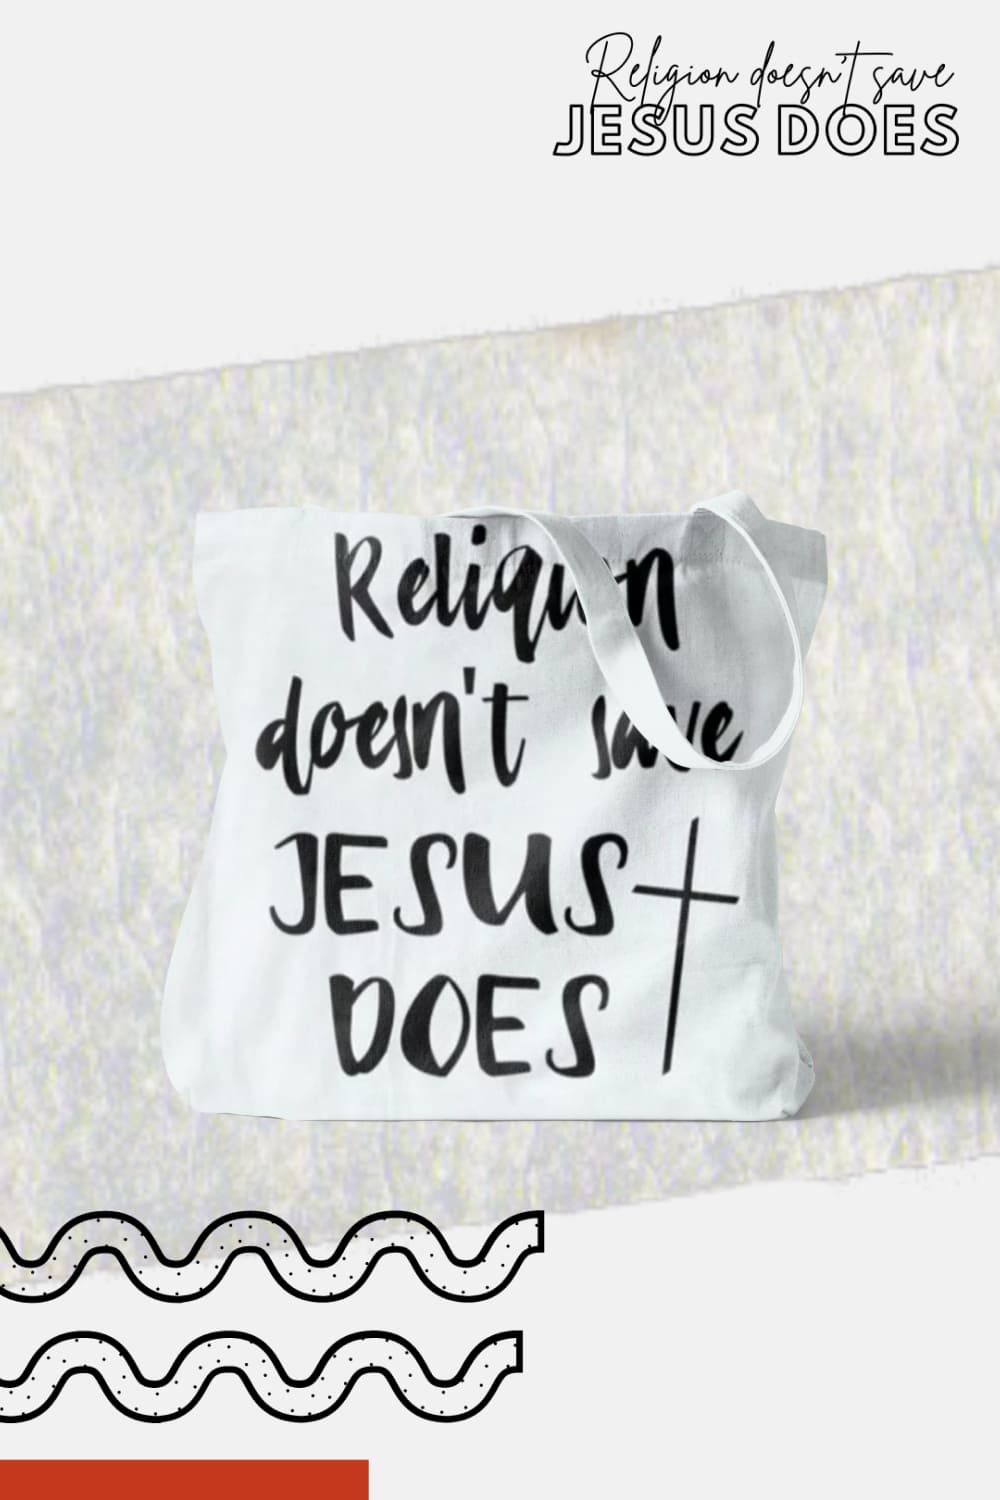 Inscription "Religion doesnt save jesus does" on the white bag.